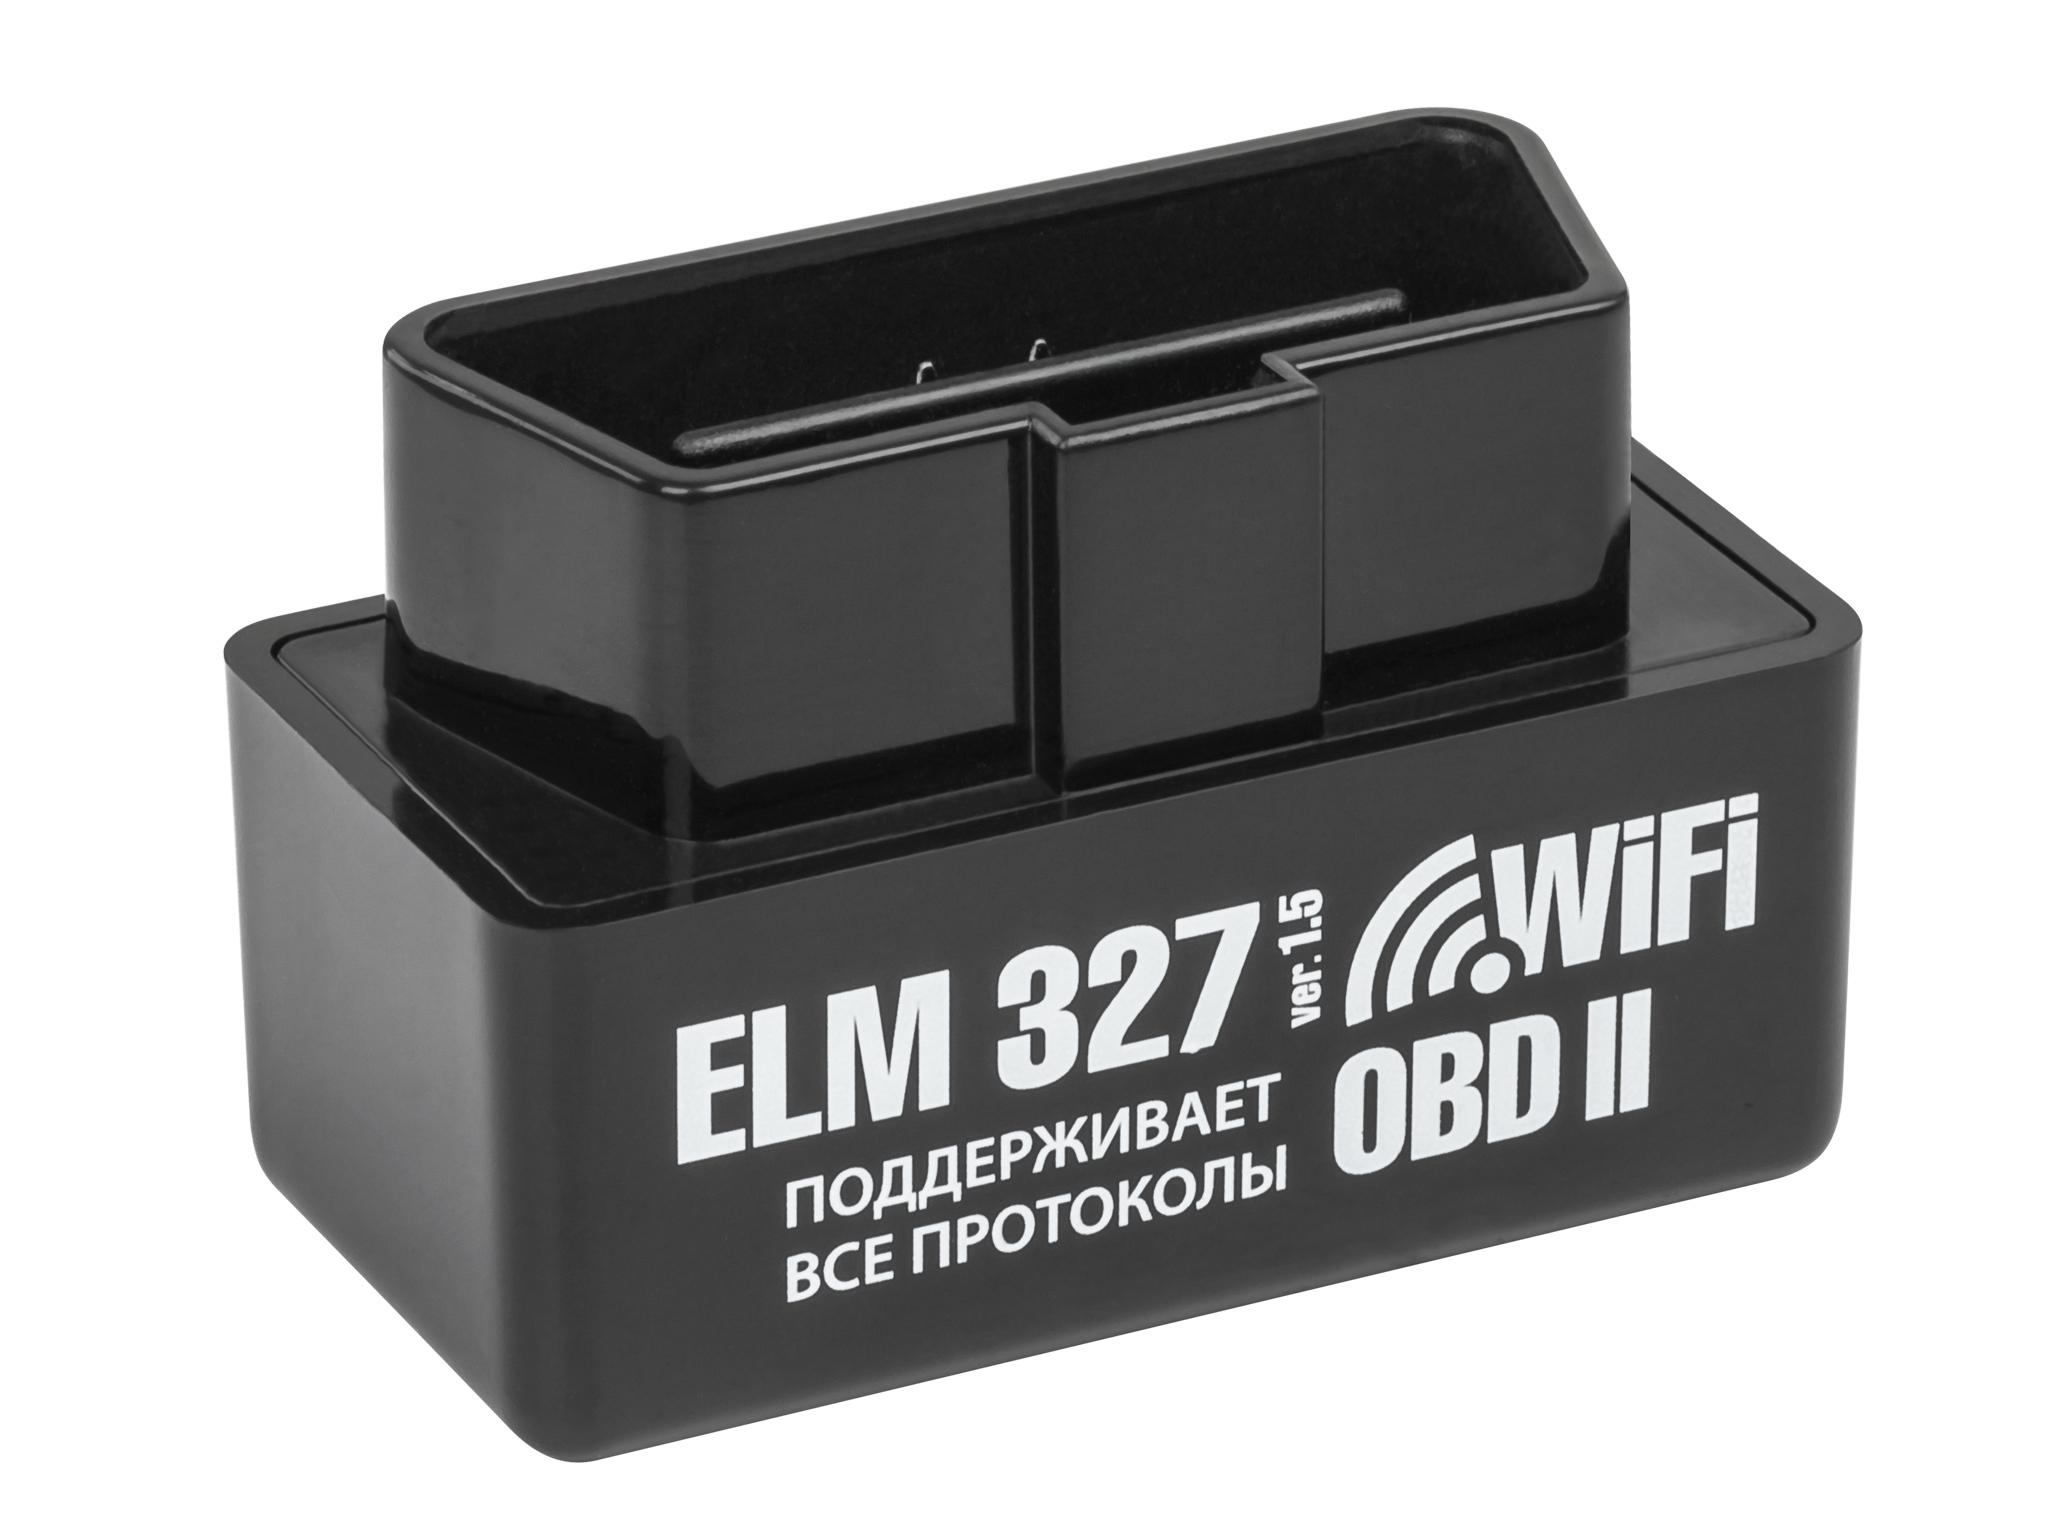 

Адаптер Emitron Elm327 wi-fi, Elm327 wi-fi